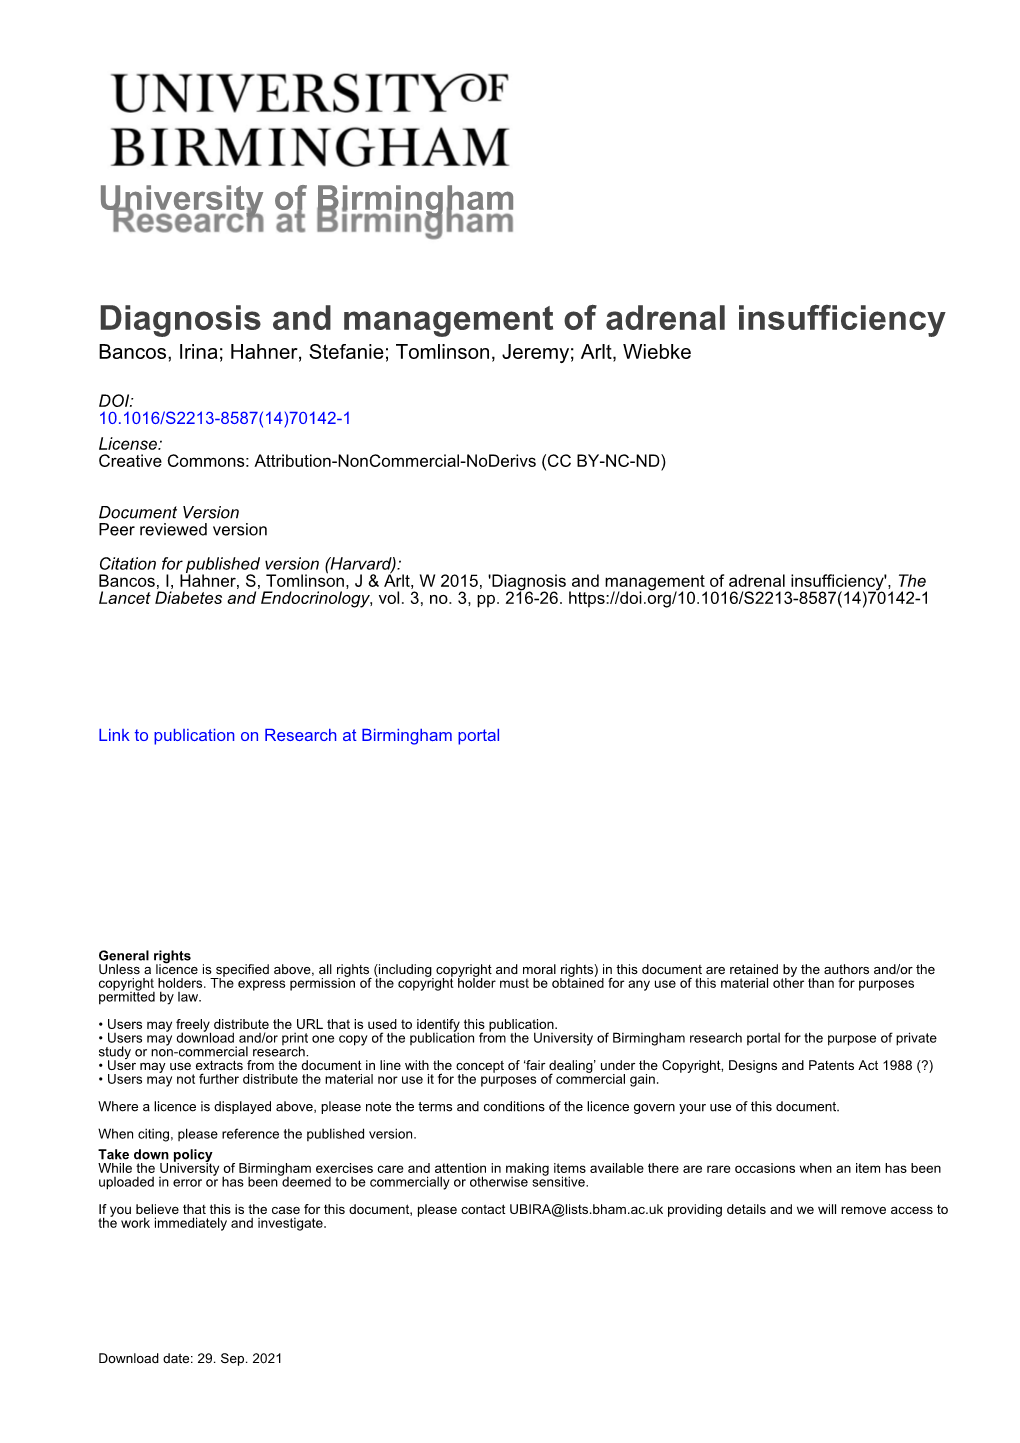 Diagnosis and Management of Adrenal Insufficiency Bancos, Irina; Hahner, Stefanie; Tomlinson, Jeremy; Arlt, Wiebke